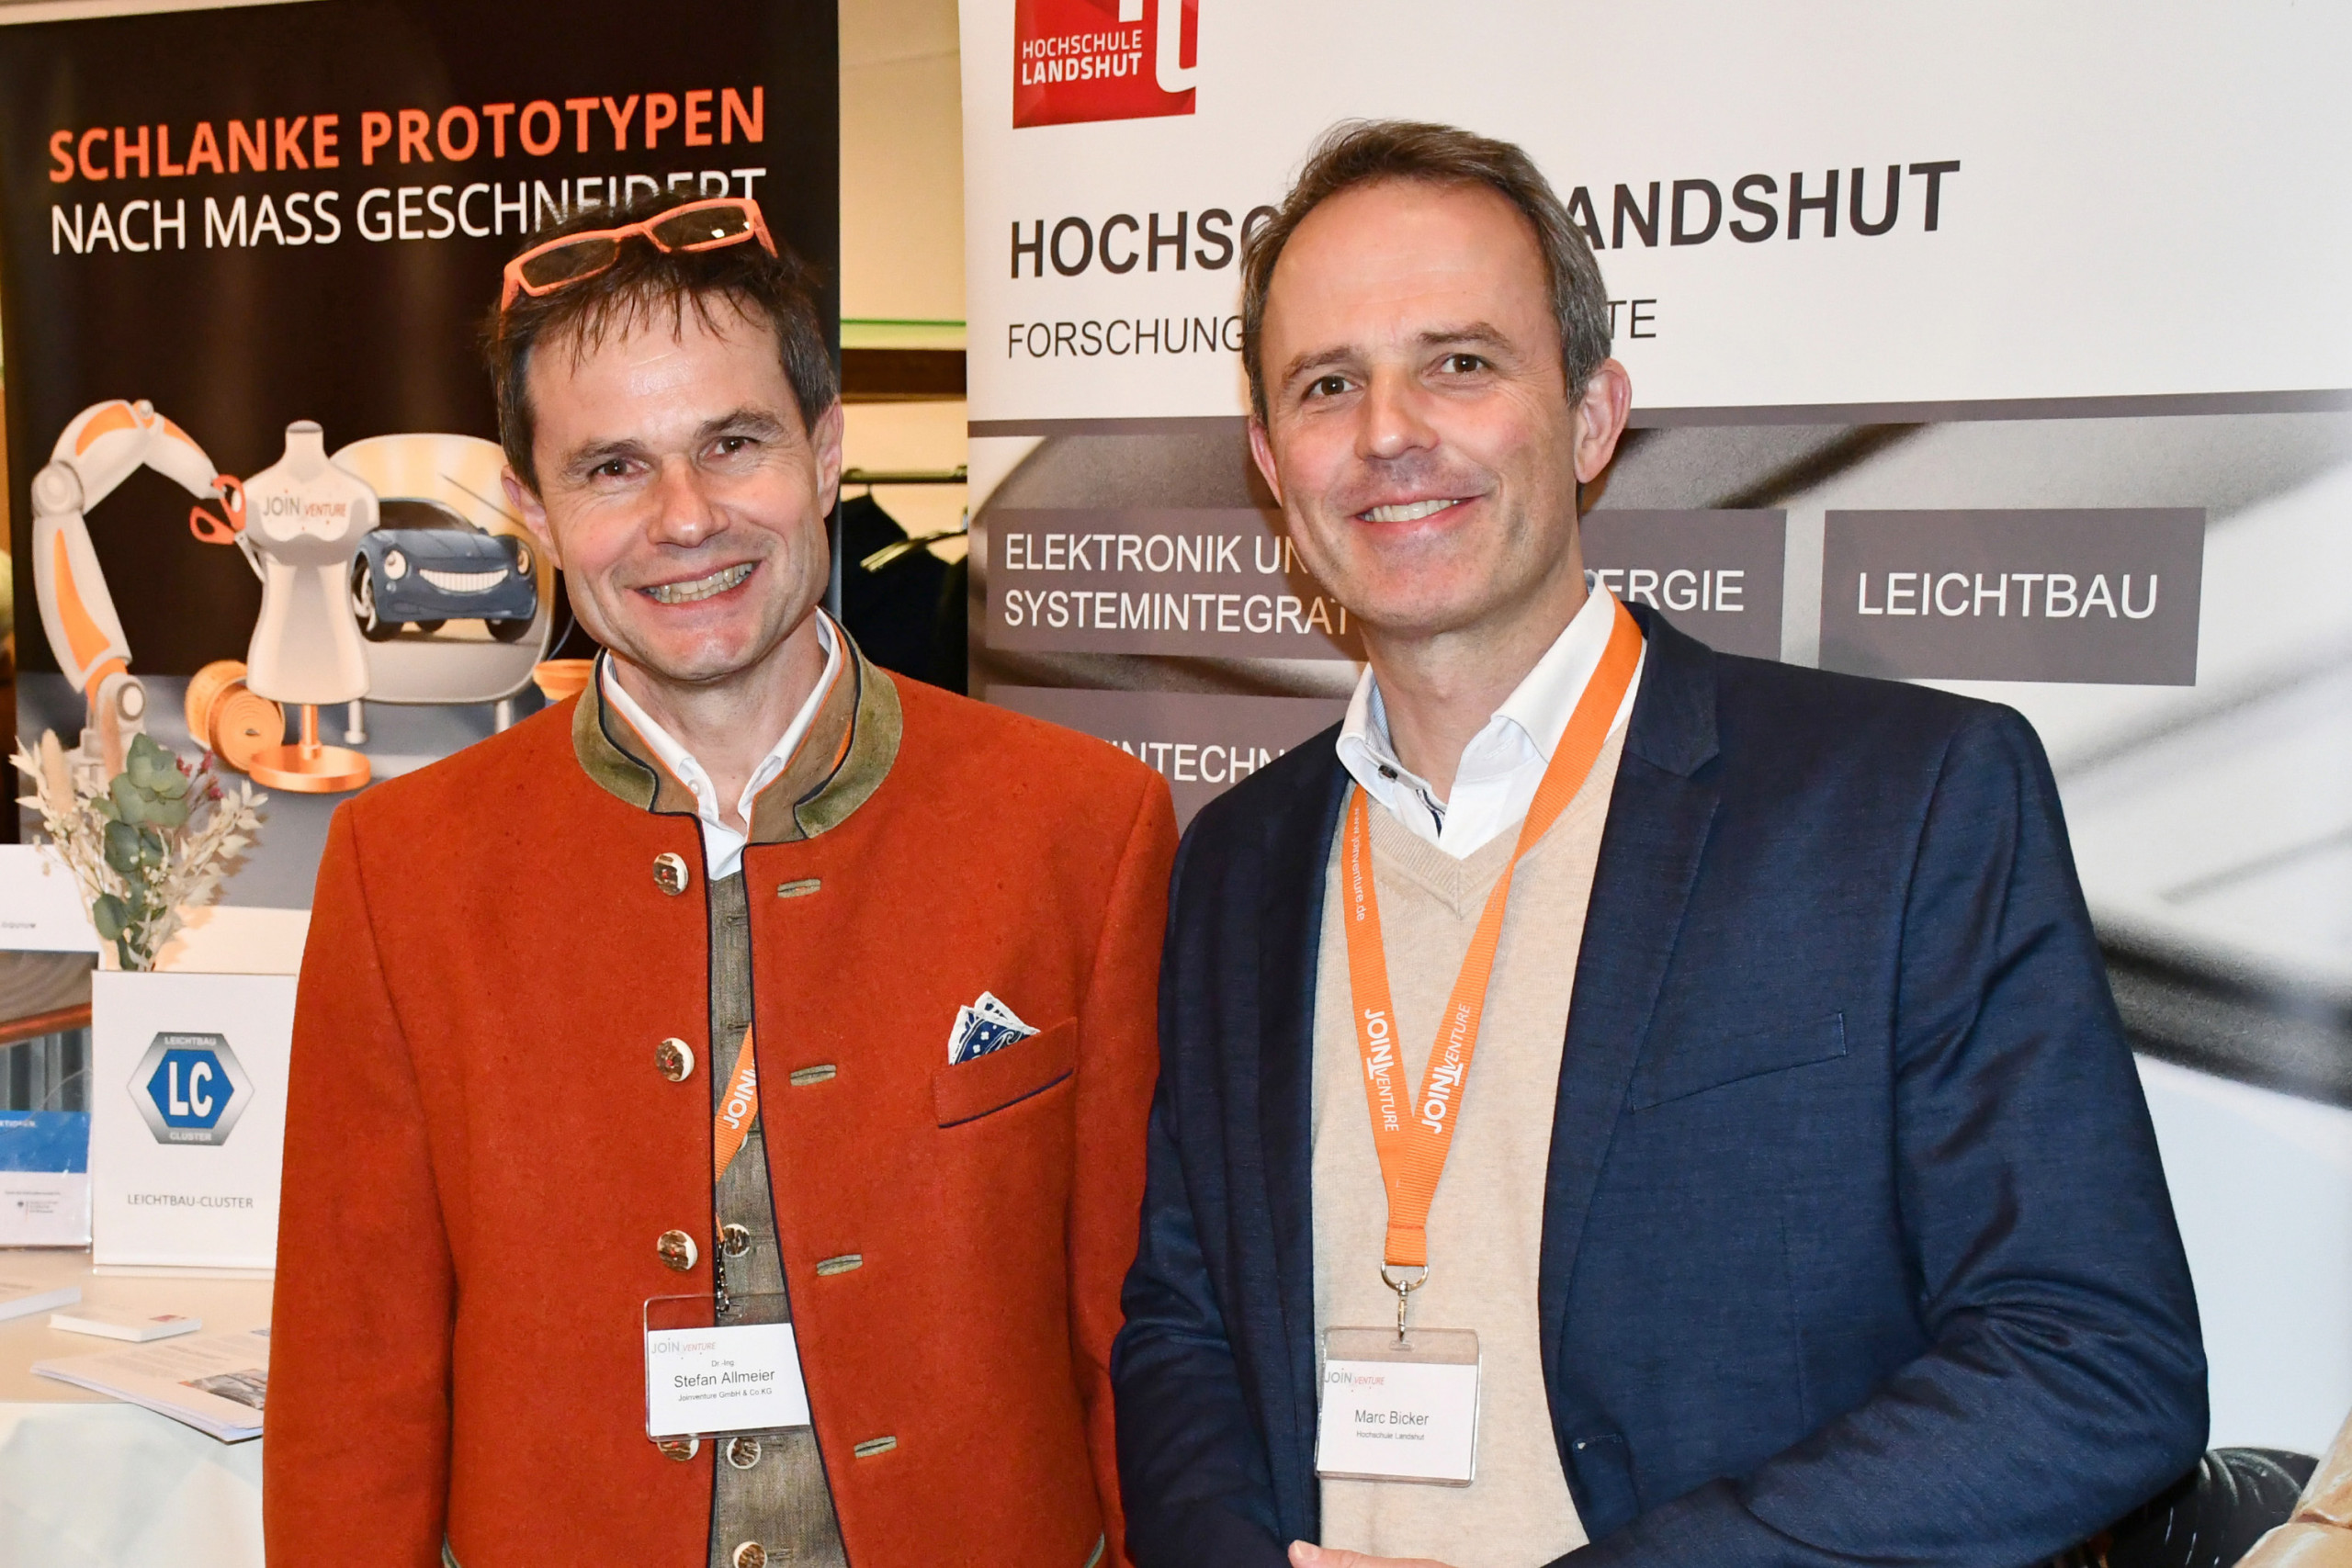 Enjoying a successful event: Stefan Allmeier Joinventure GmbH & Co. KG) with Marc Bicker (Lightweight Construction Cluster at Landshut University of Applied Sciences).